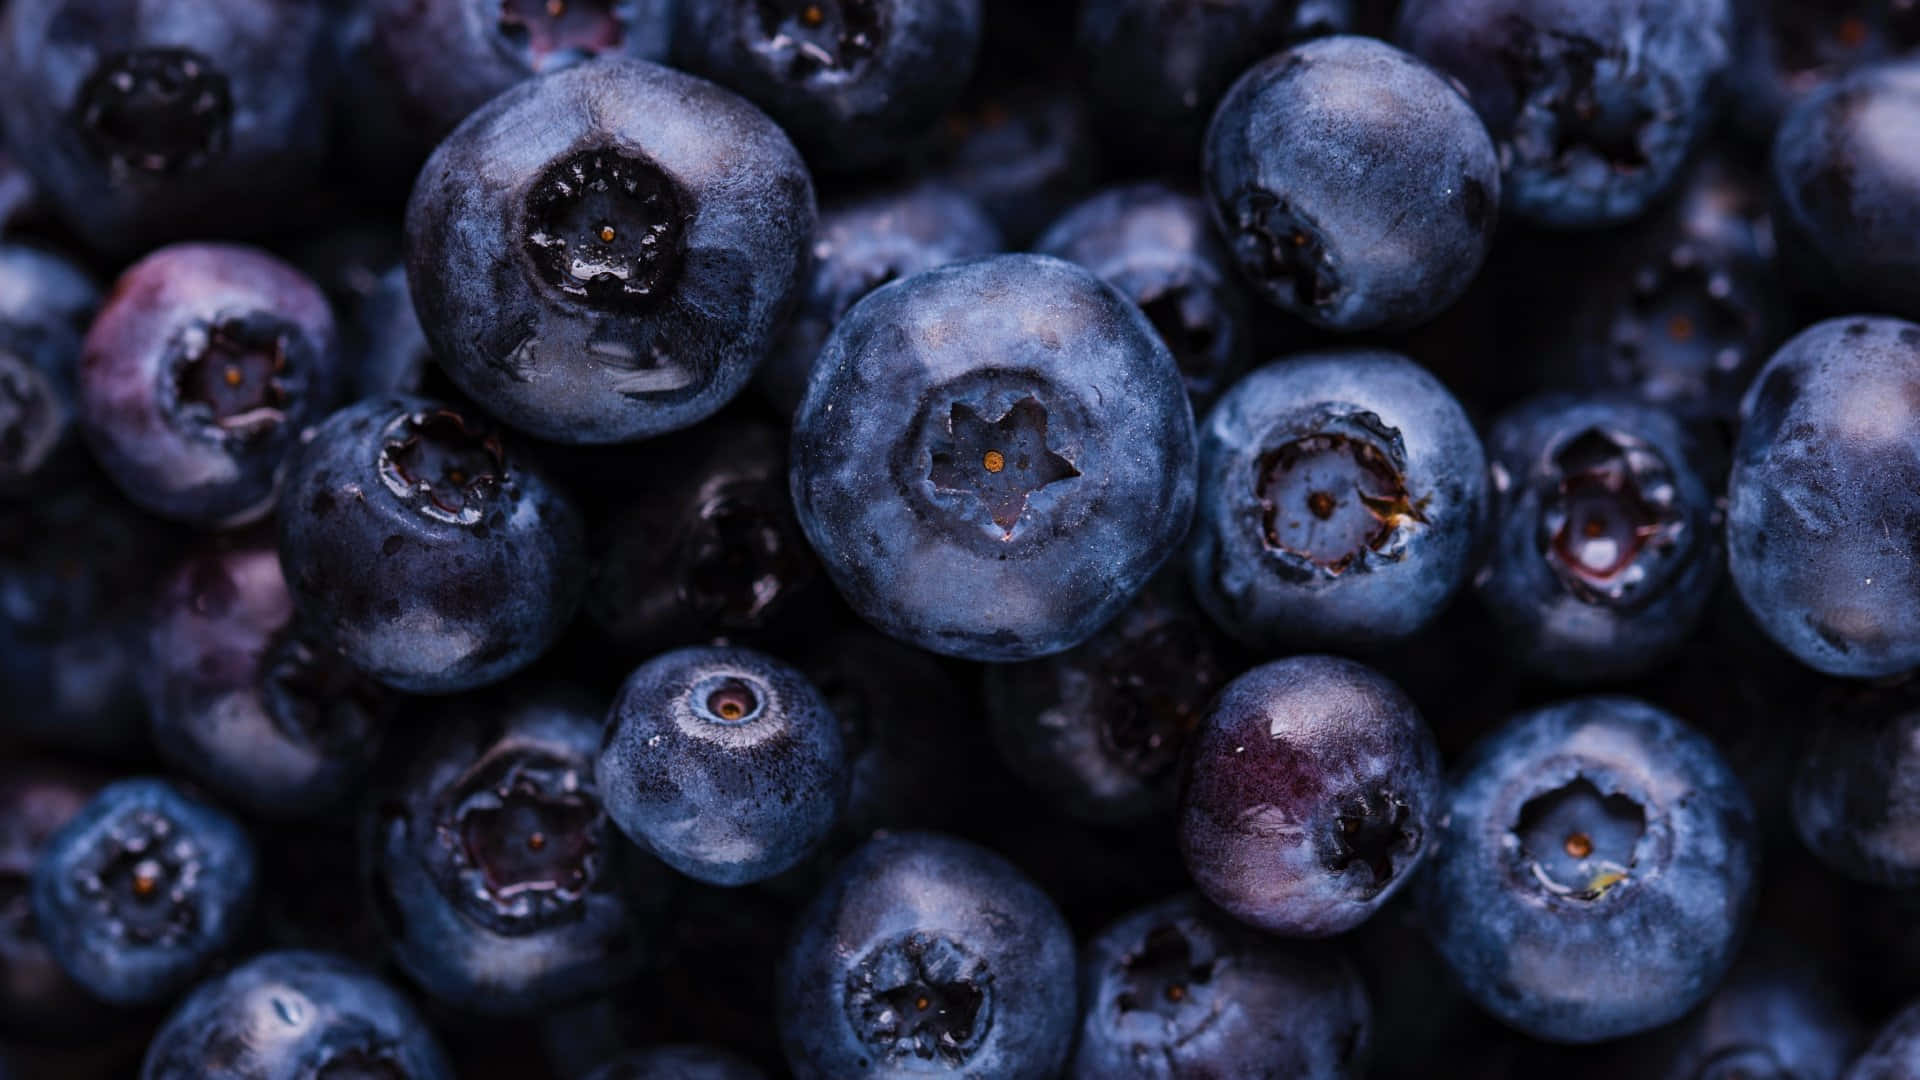 Blueberry Background Wallpaper